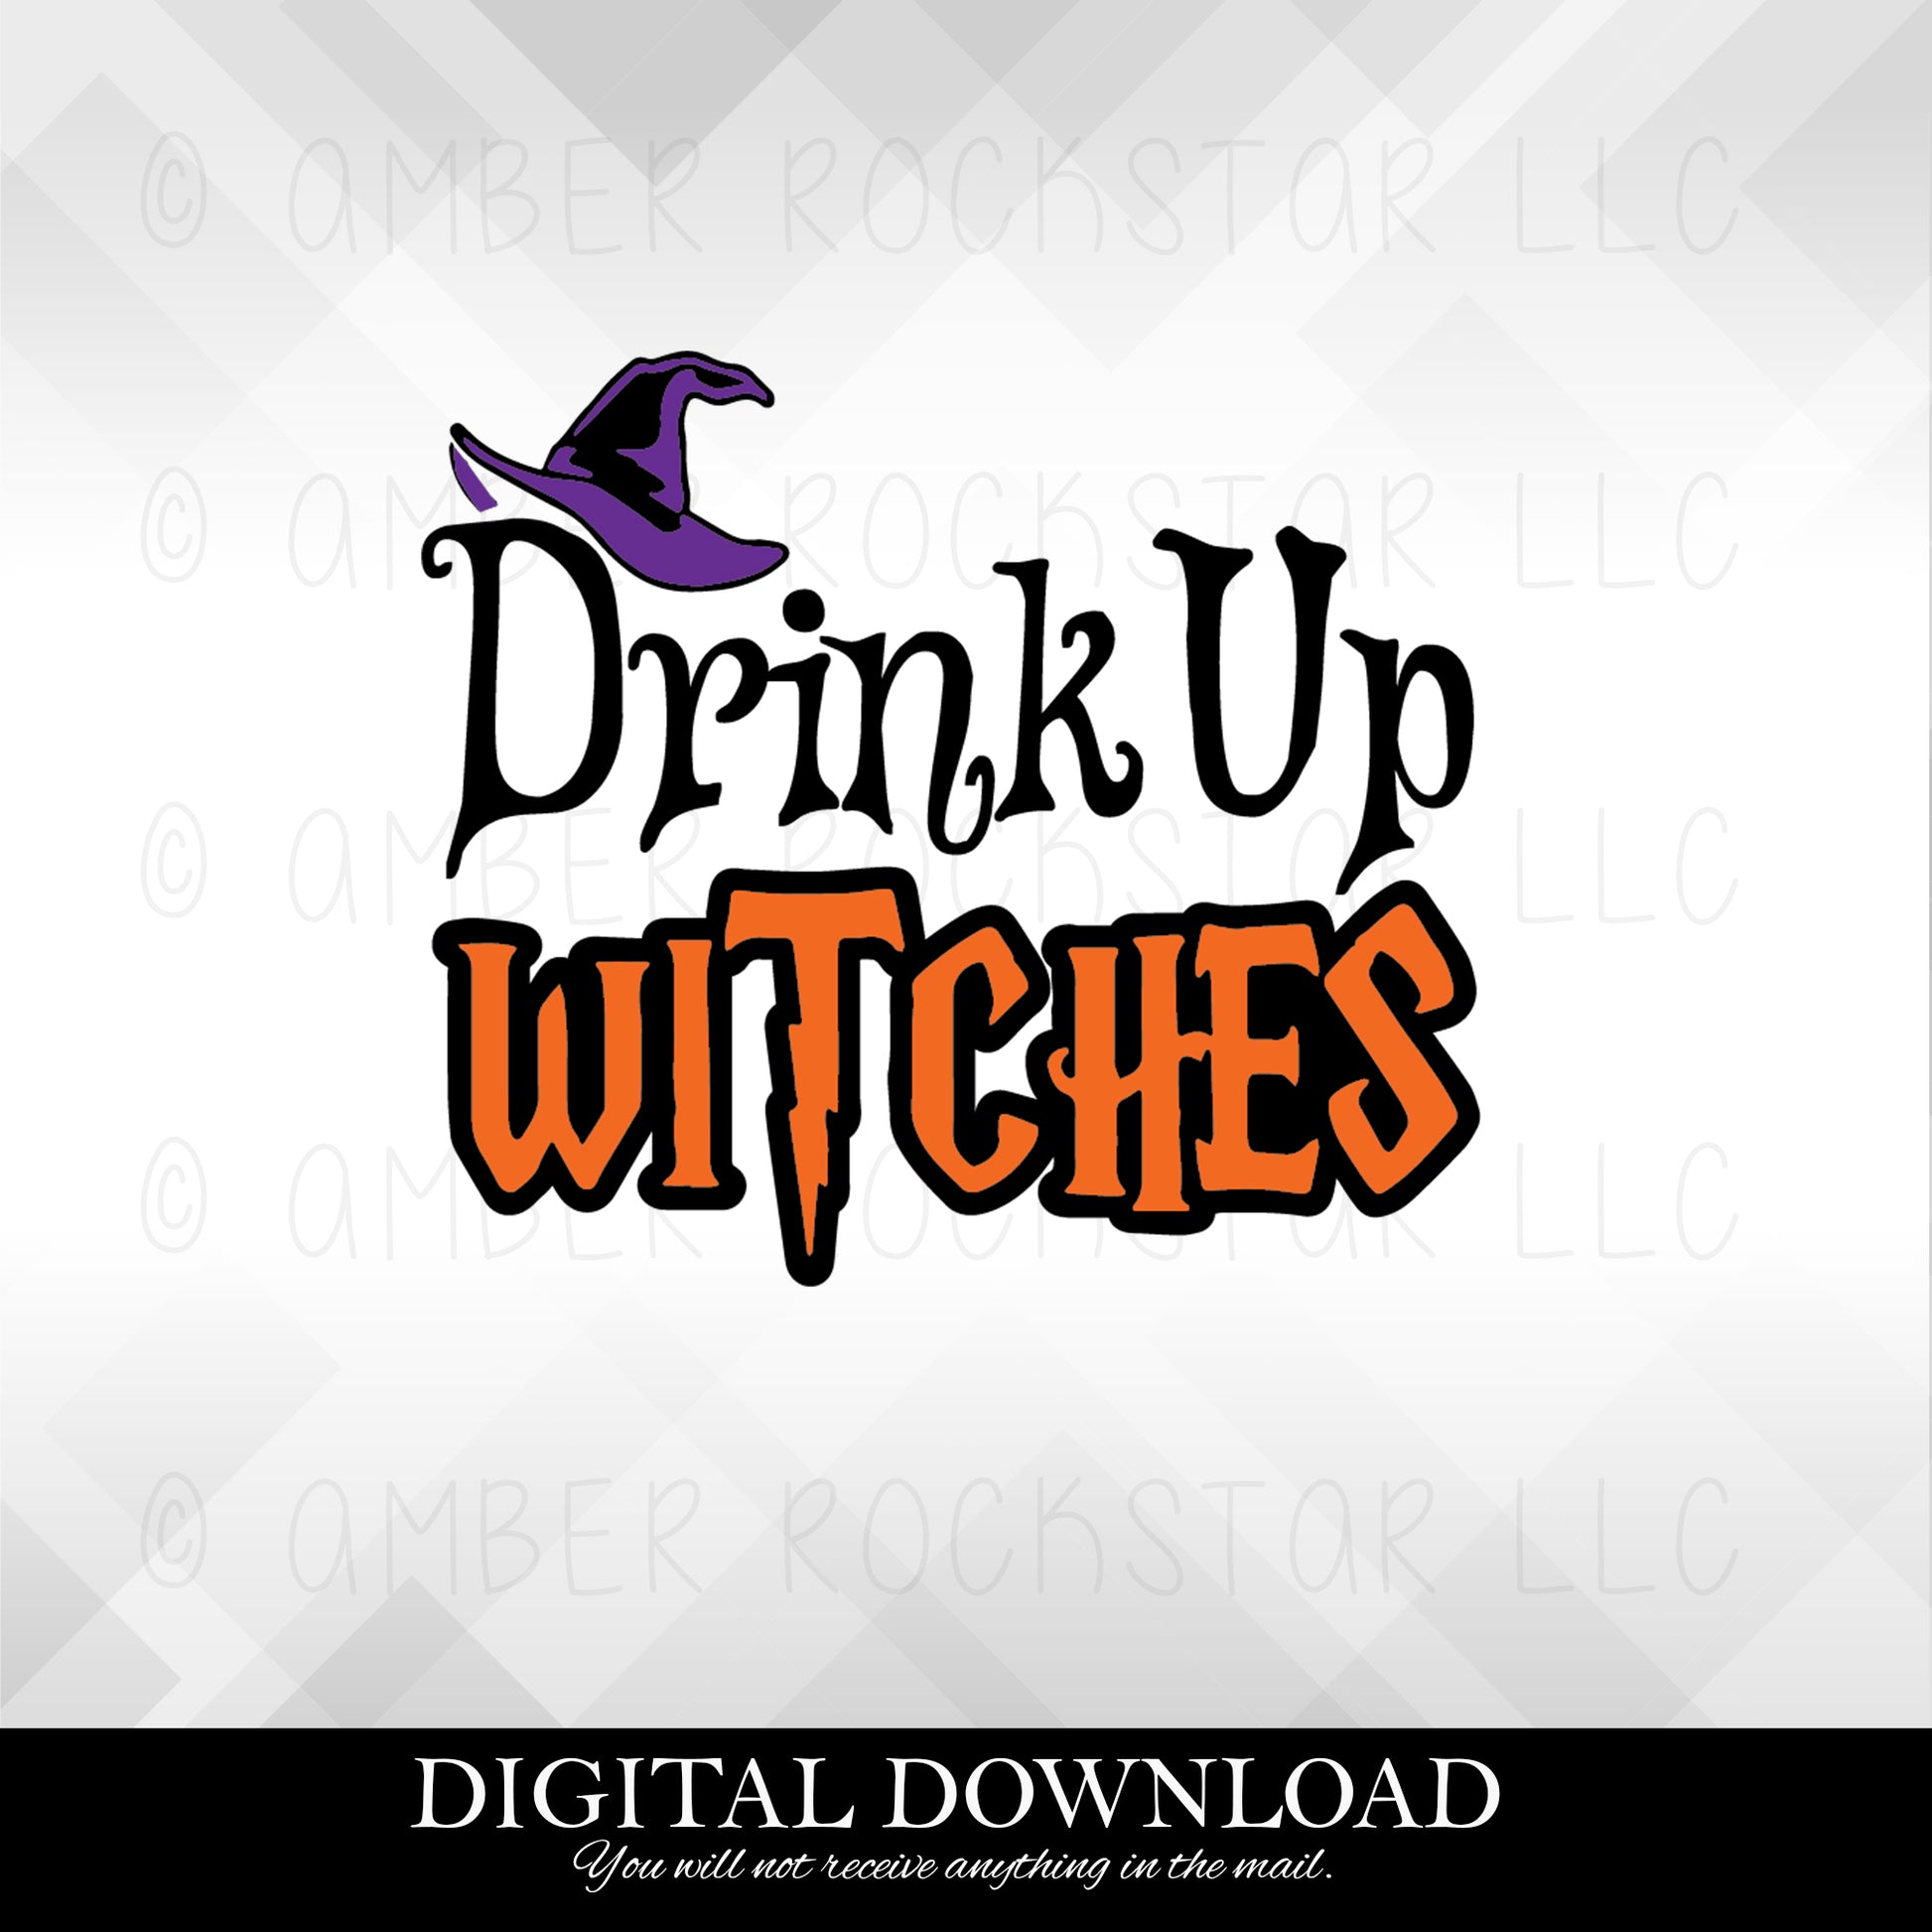 DIGITAL DOWNLOAD:  Drink up witches - Halloween SVG file | Amber Rockstar